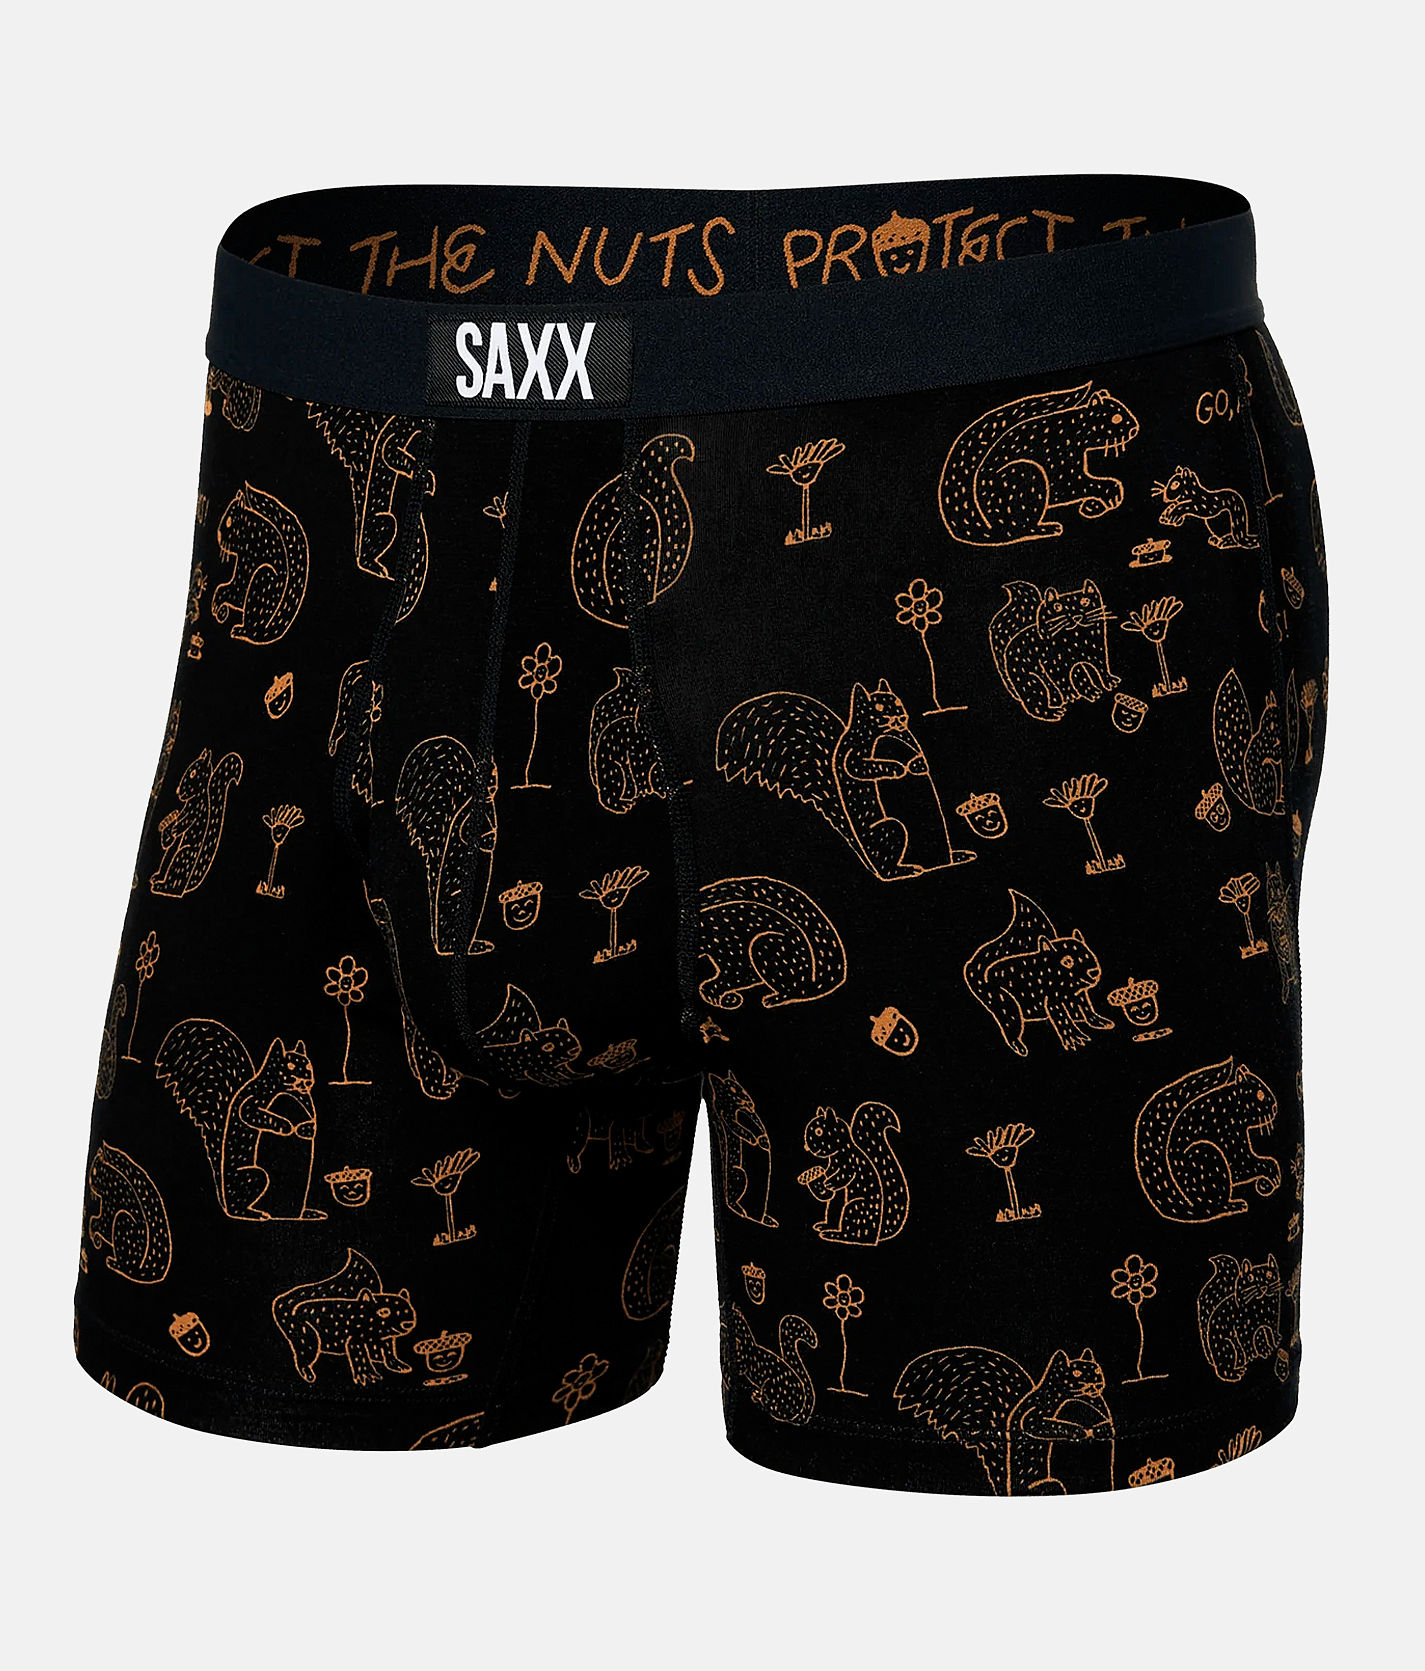 SAXX Underwear: Experience the BallPark Pouch™